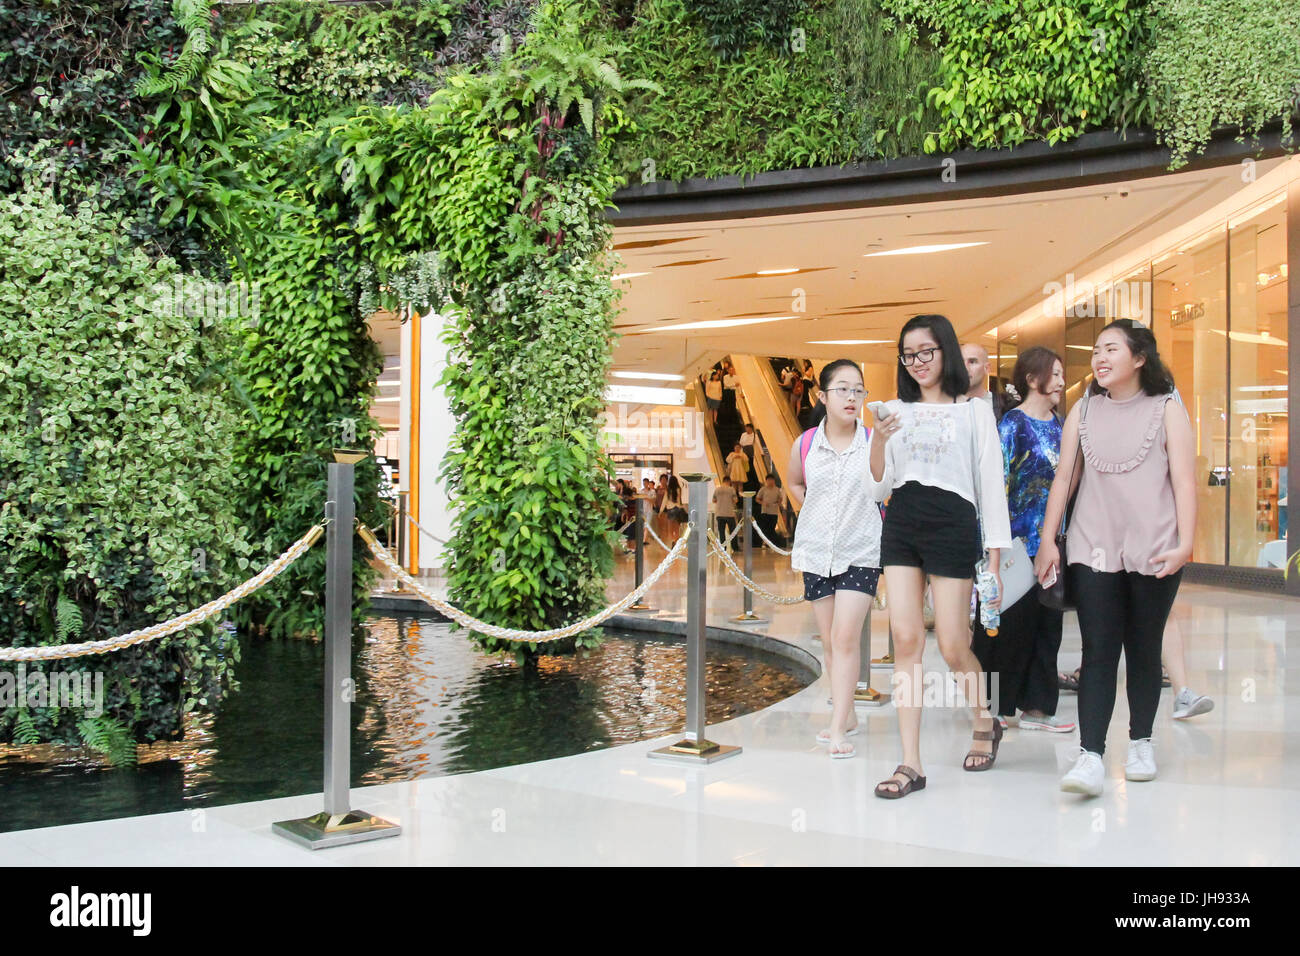 Emporium shopping mall on Sukhumvit road in Bangkok, Thail…